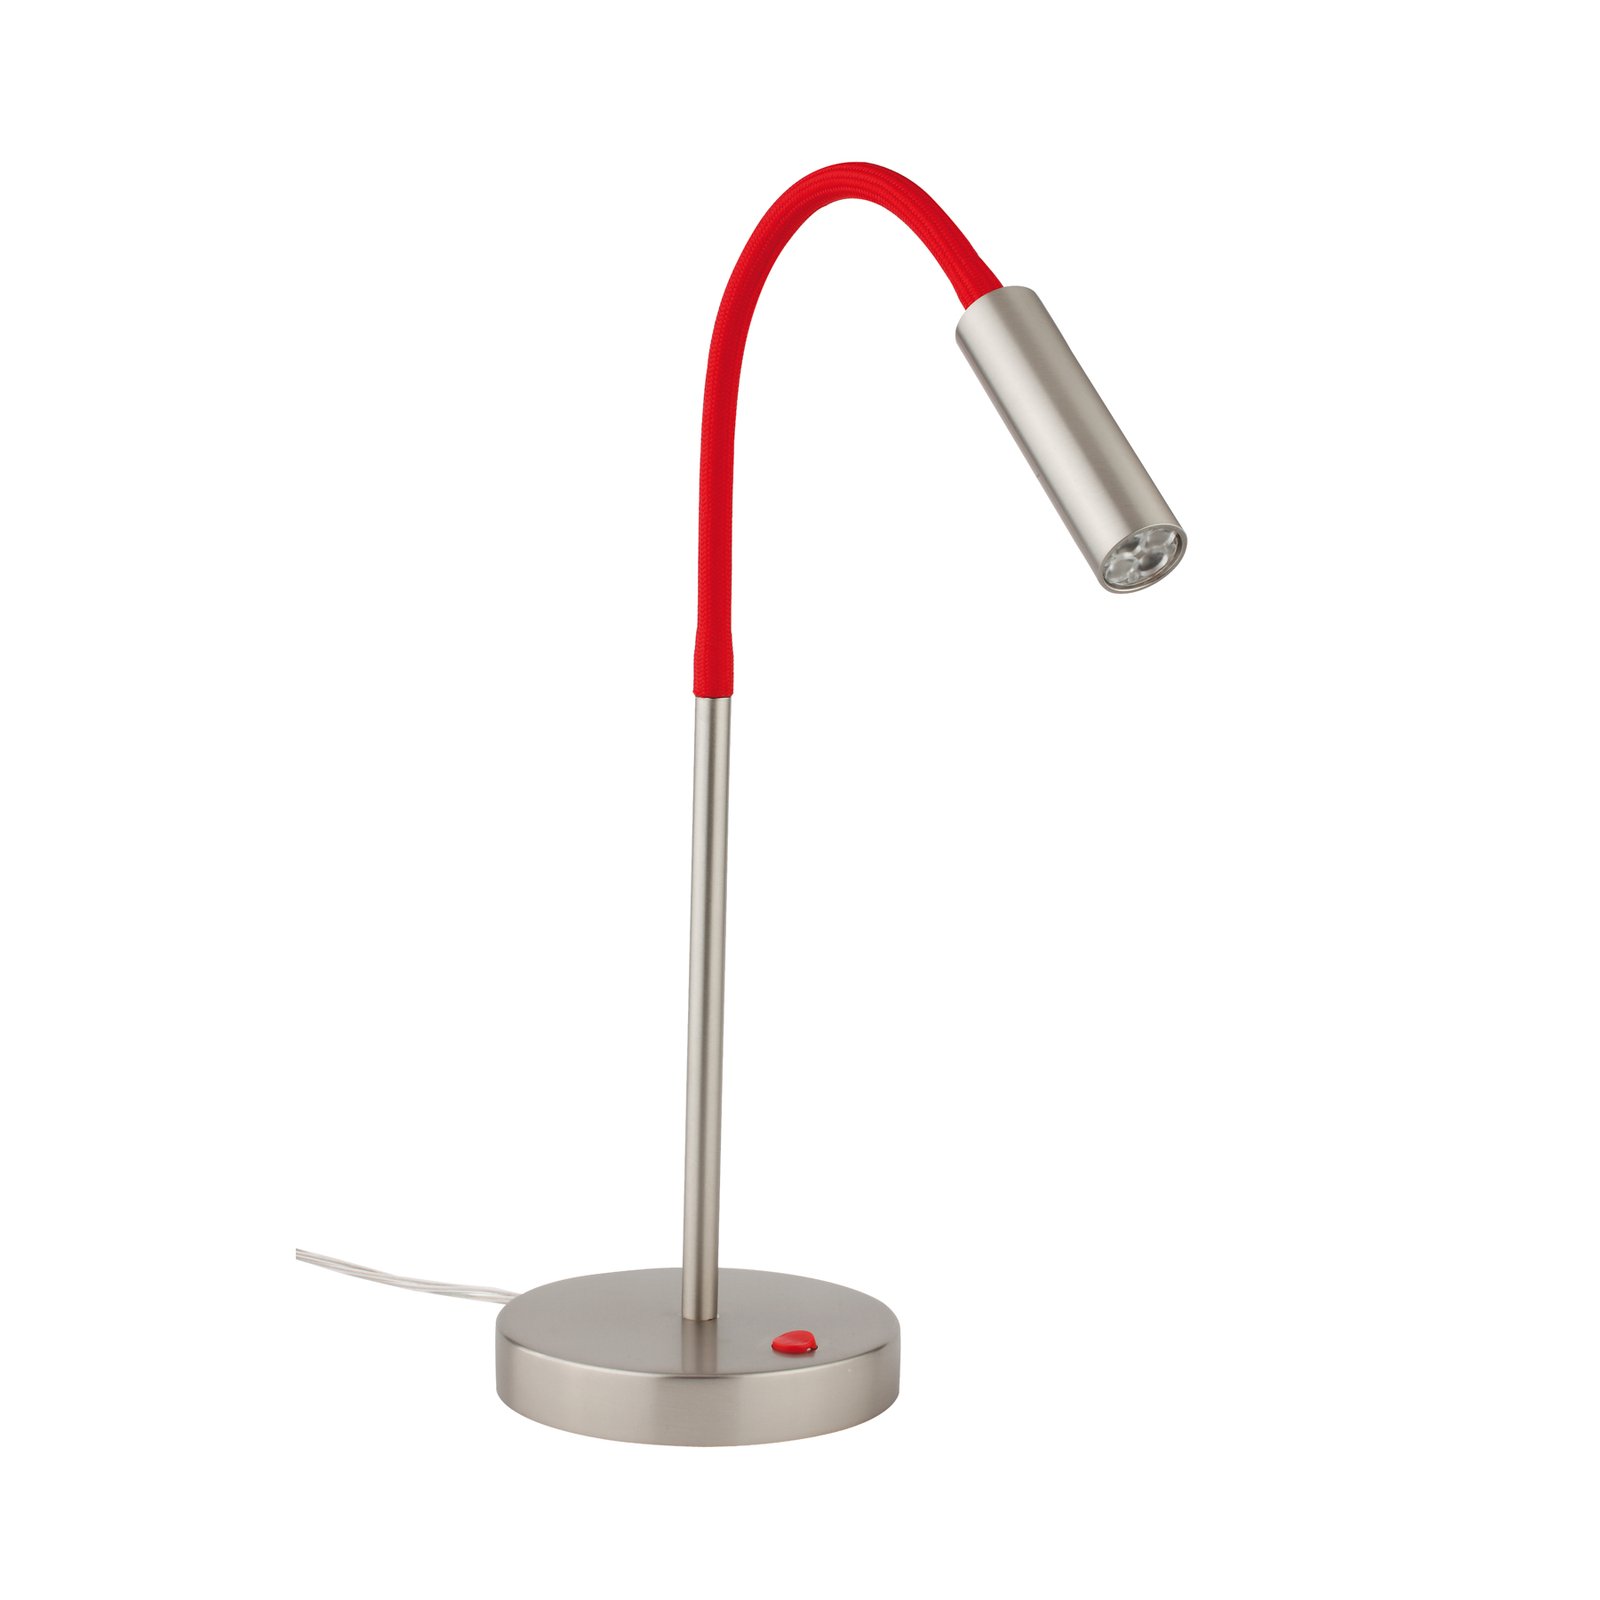 LED tafellamp Rocco, nikkel mat flexibele arm rood